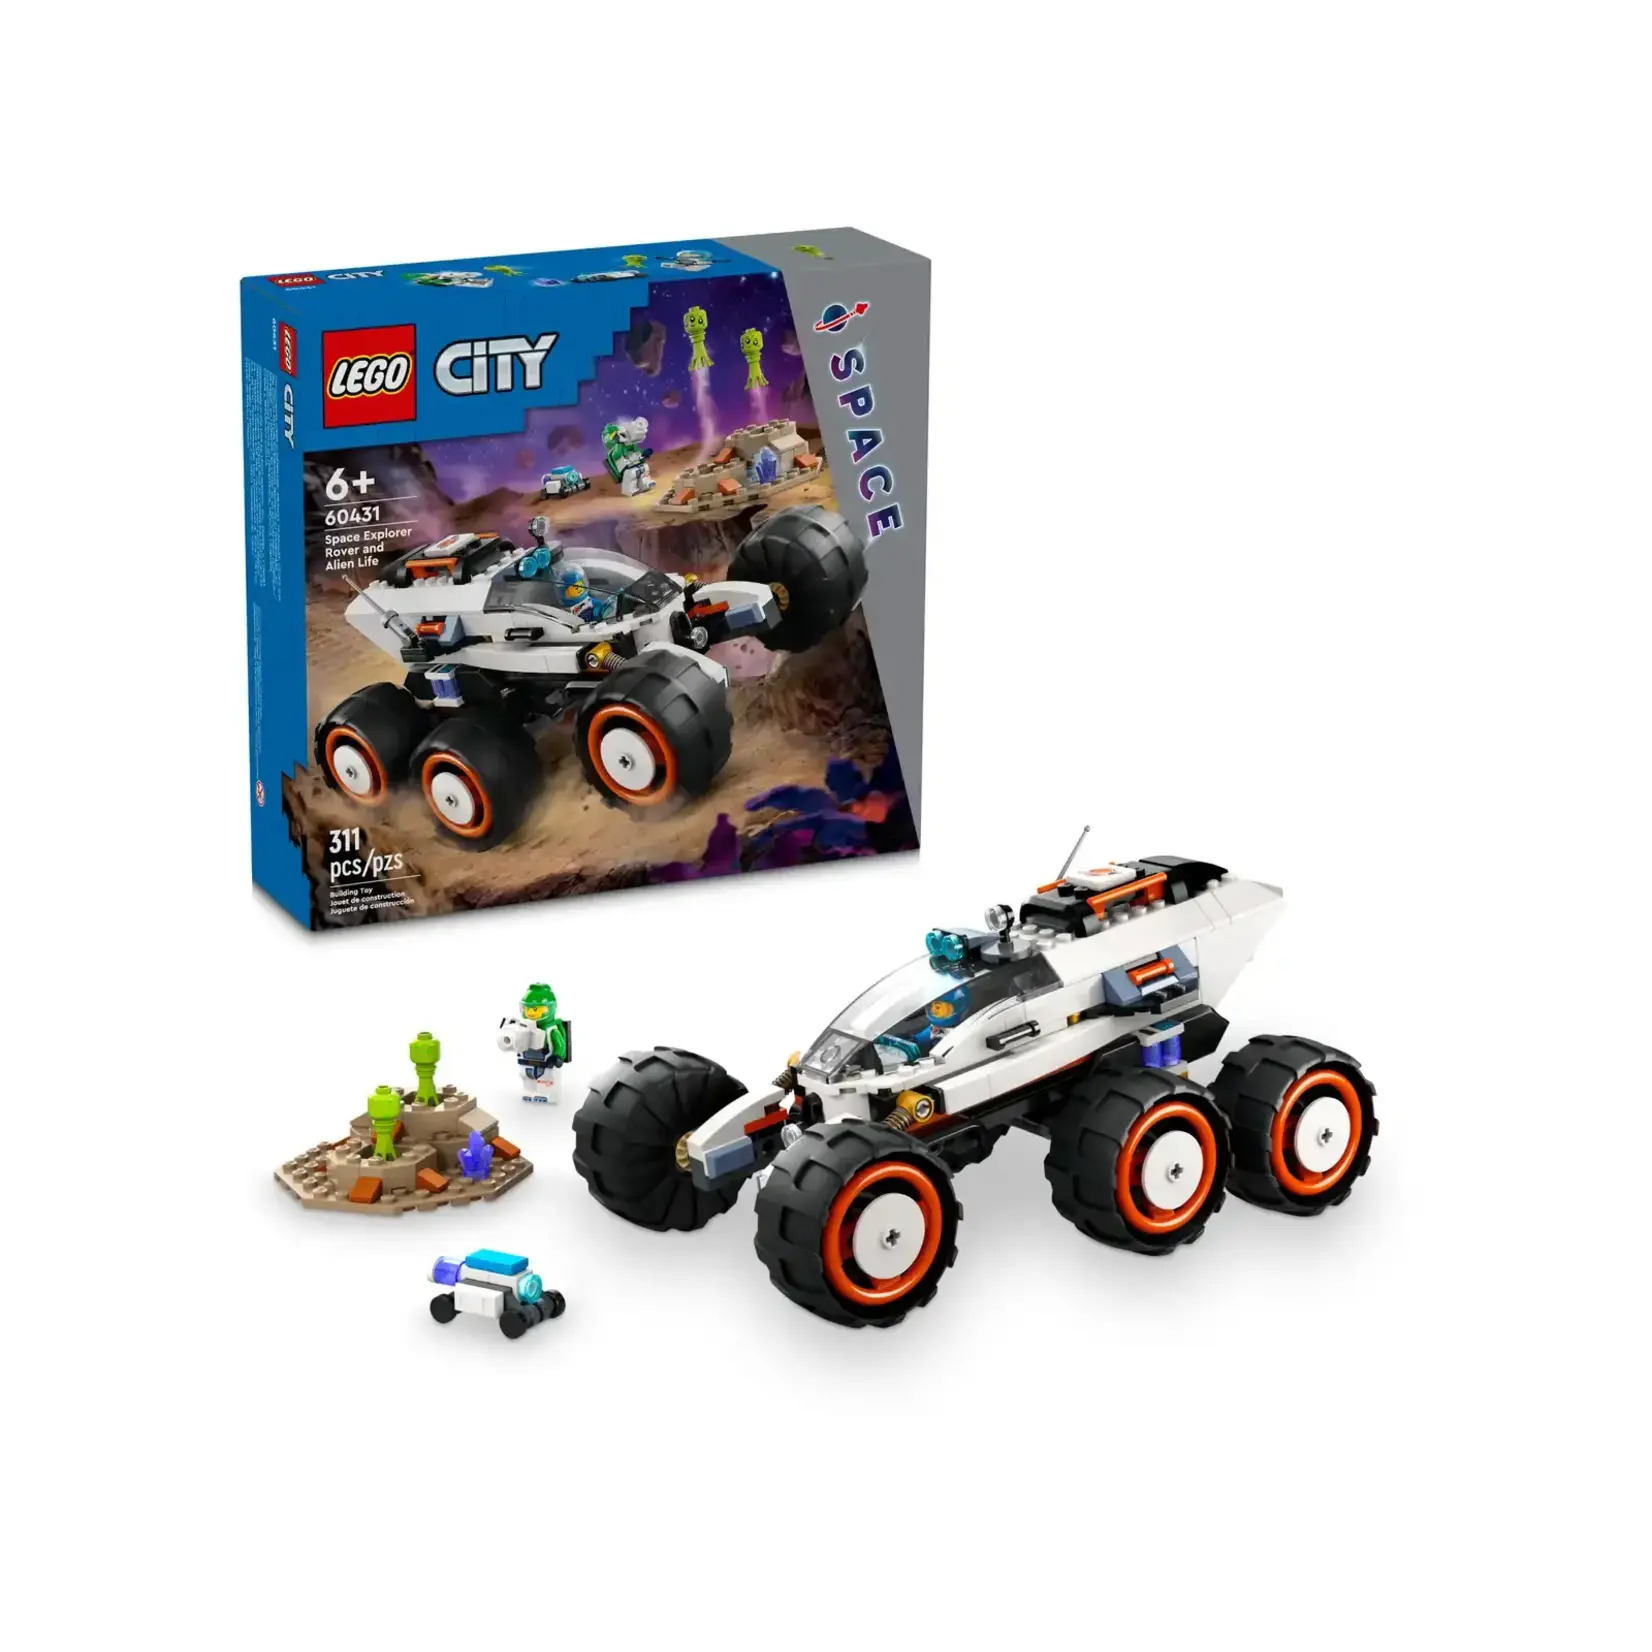 LEGO LEGO City Space Explorer Rover and Alien Life (60431)